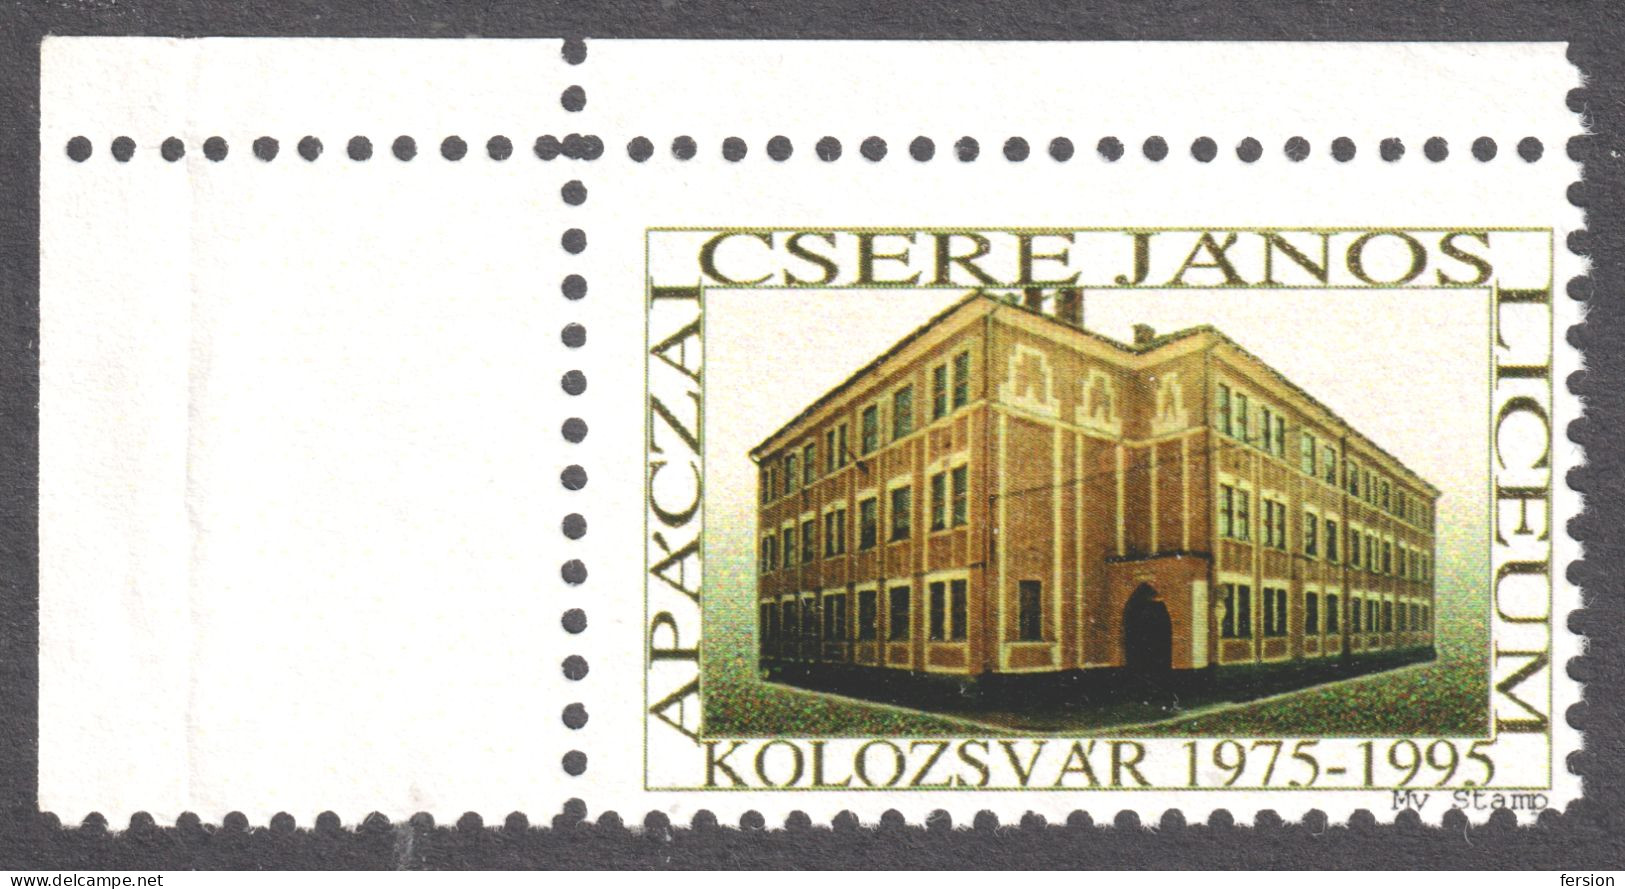 Transylvania Erdély Liceul Apaczai Csere Janos CLUJ Kolozsvár LICEUM LABEL CINDERELLA VIGNETTE 1995 Hungary My Stamp - Transilvania